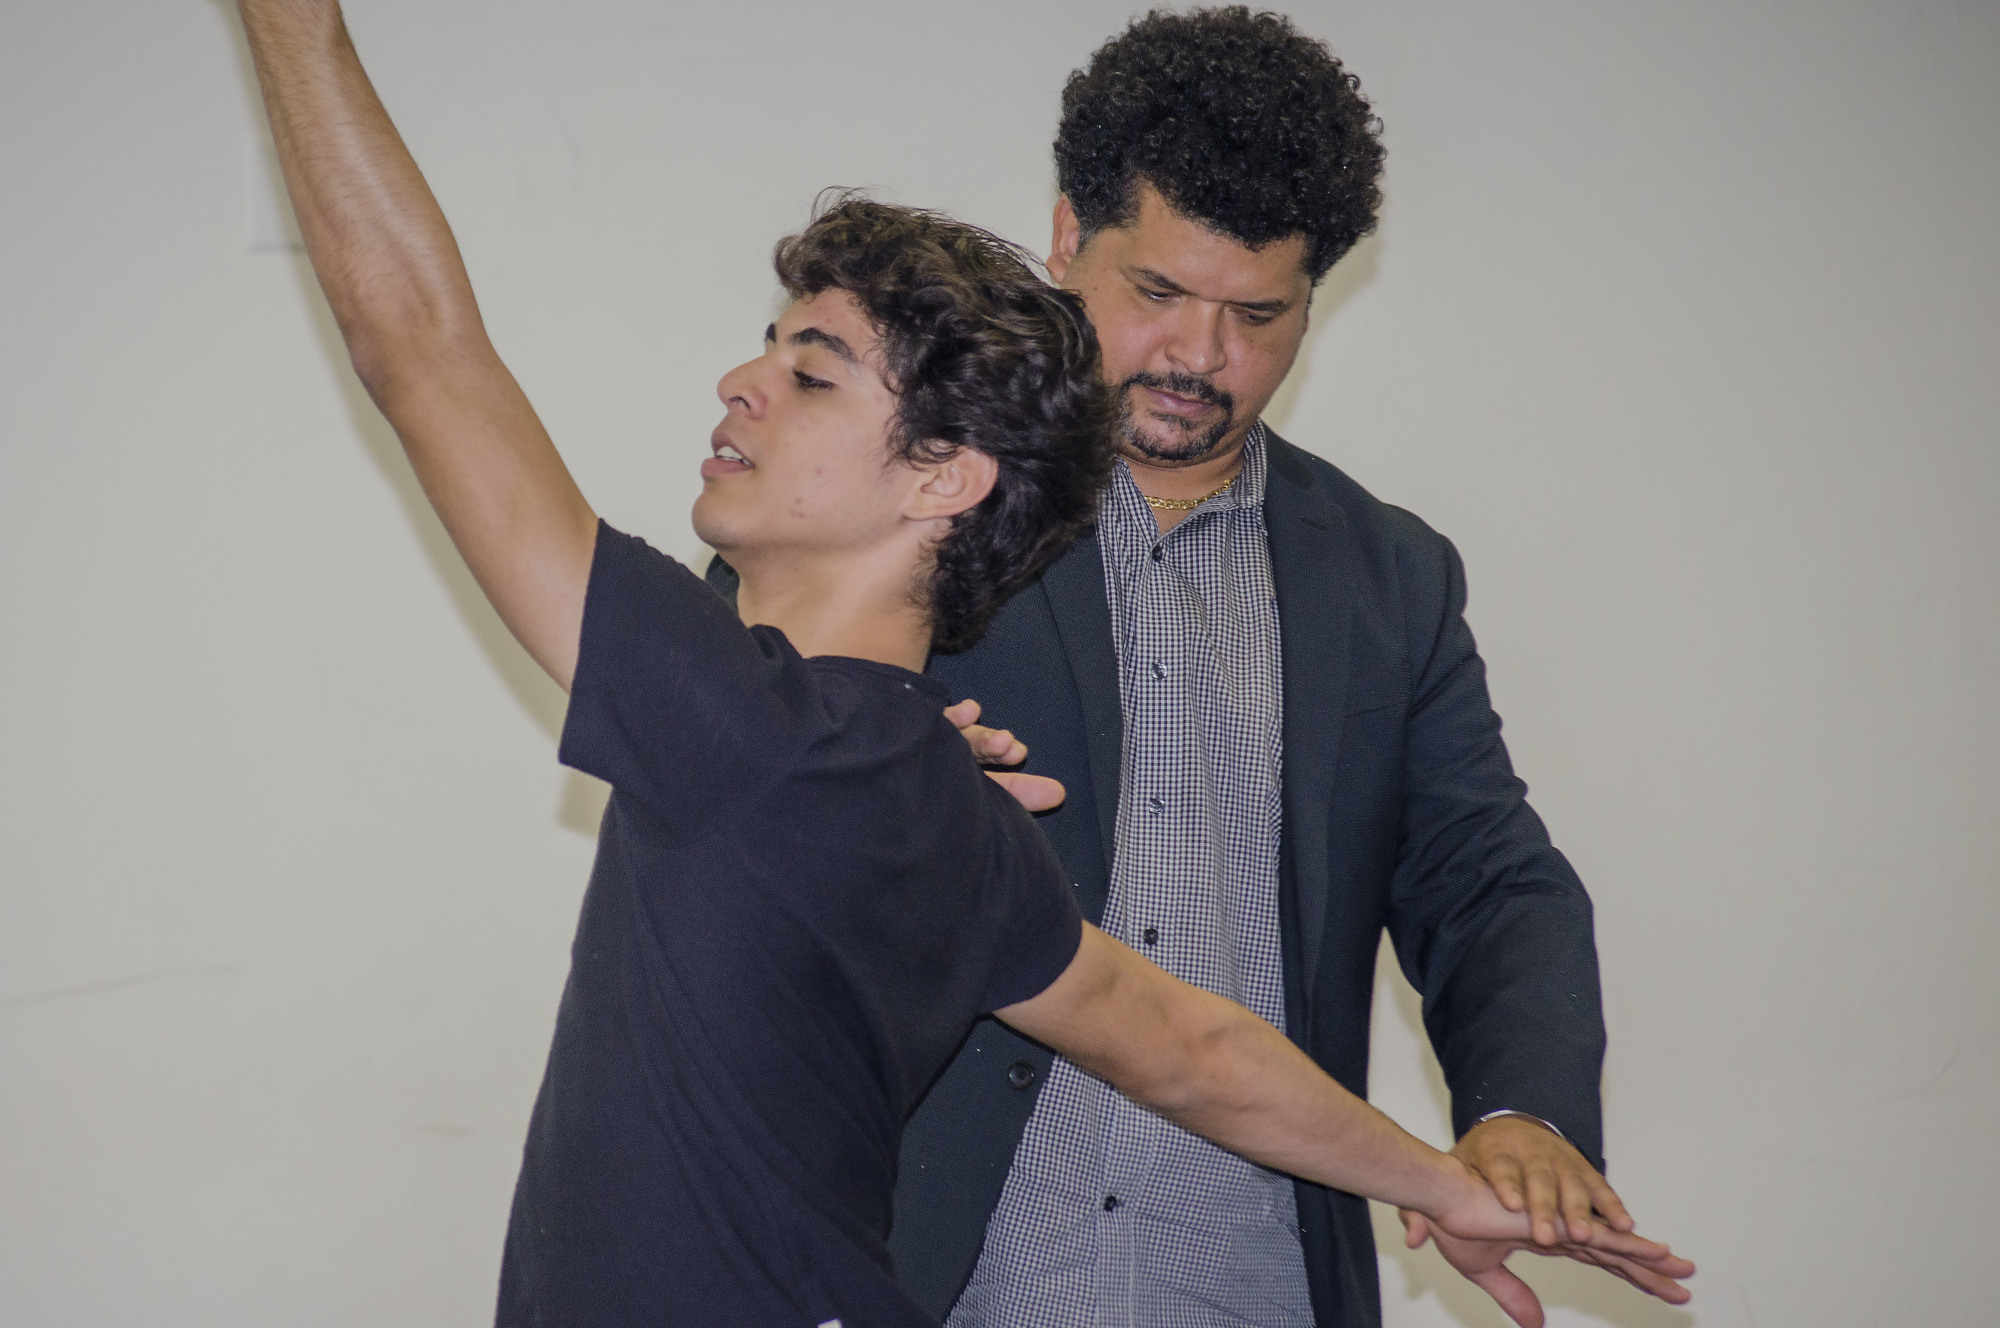 Ariel Serrano works with Francois Llorente at the Sarasota Cuban Ballet School